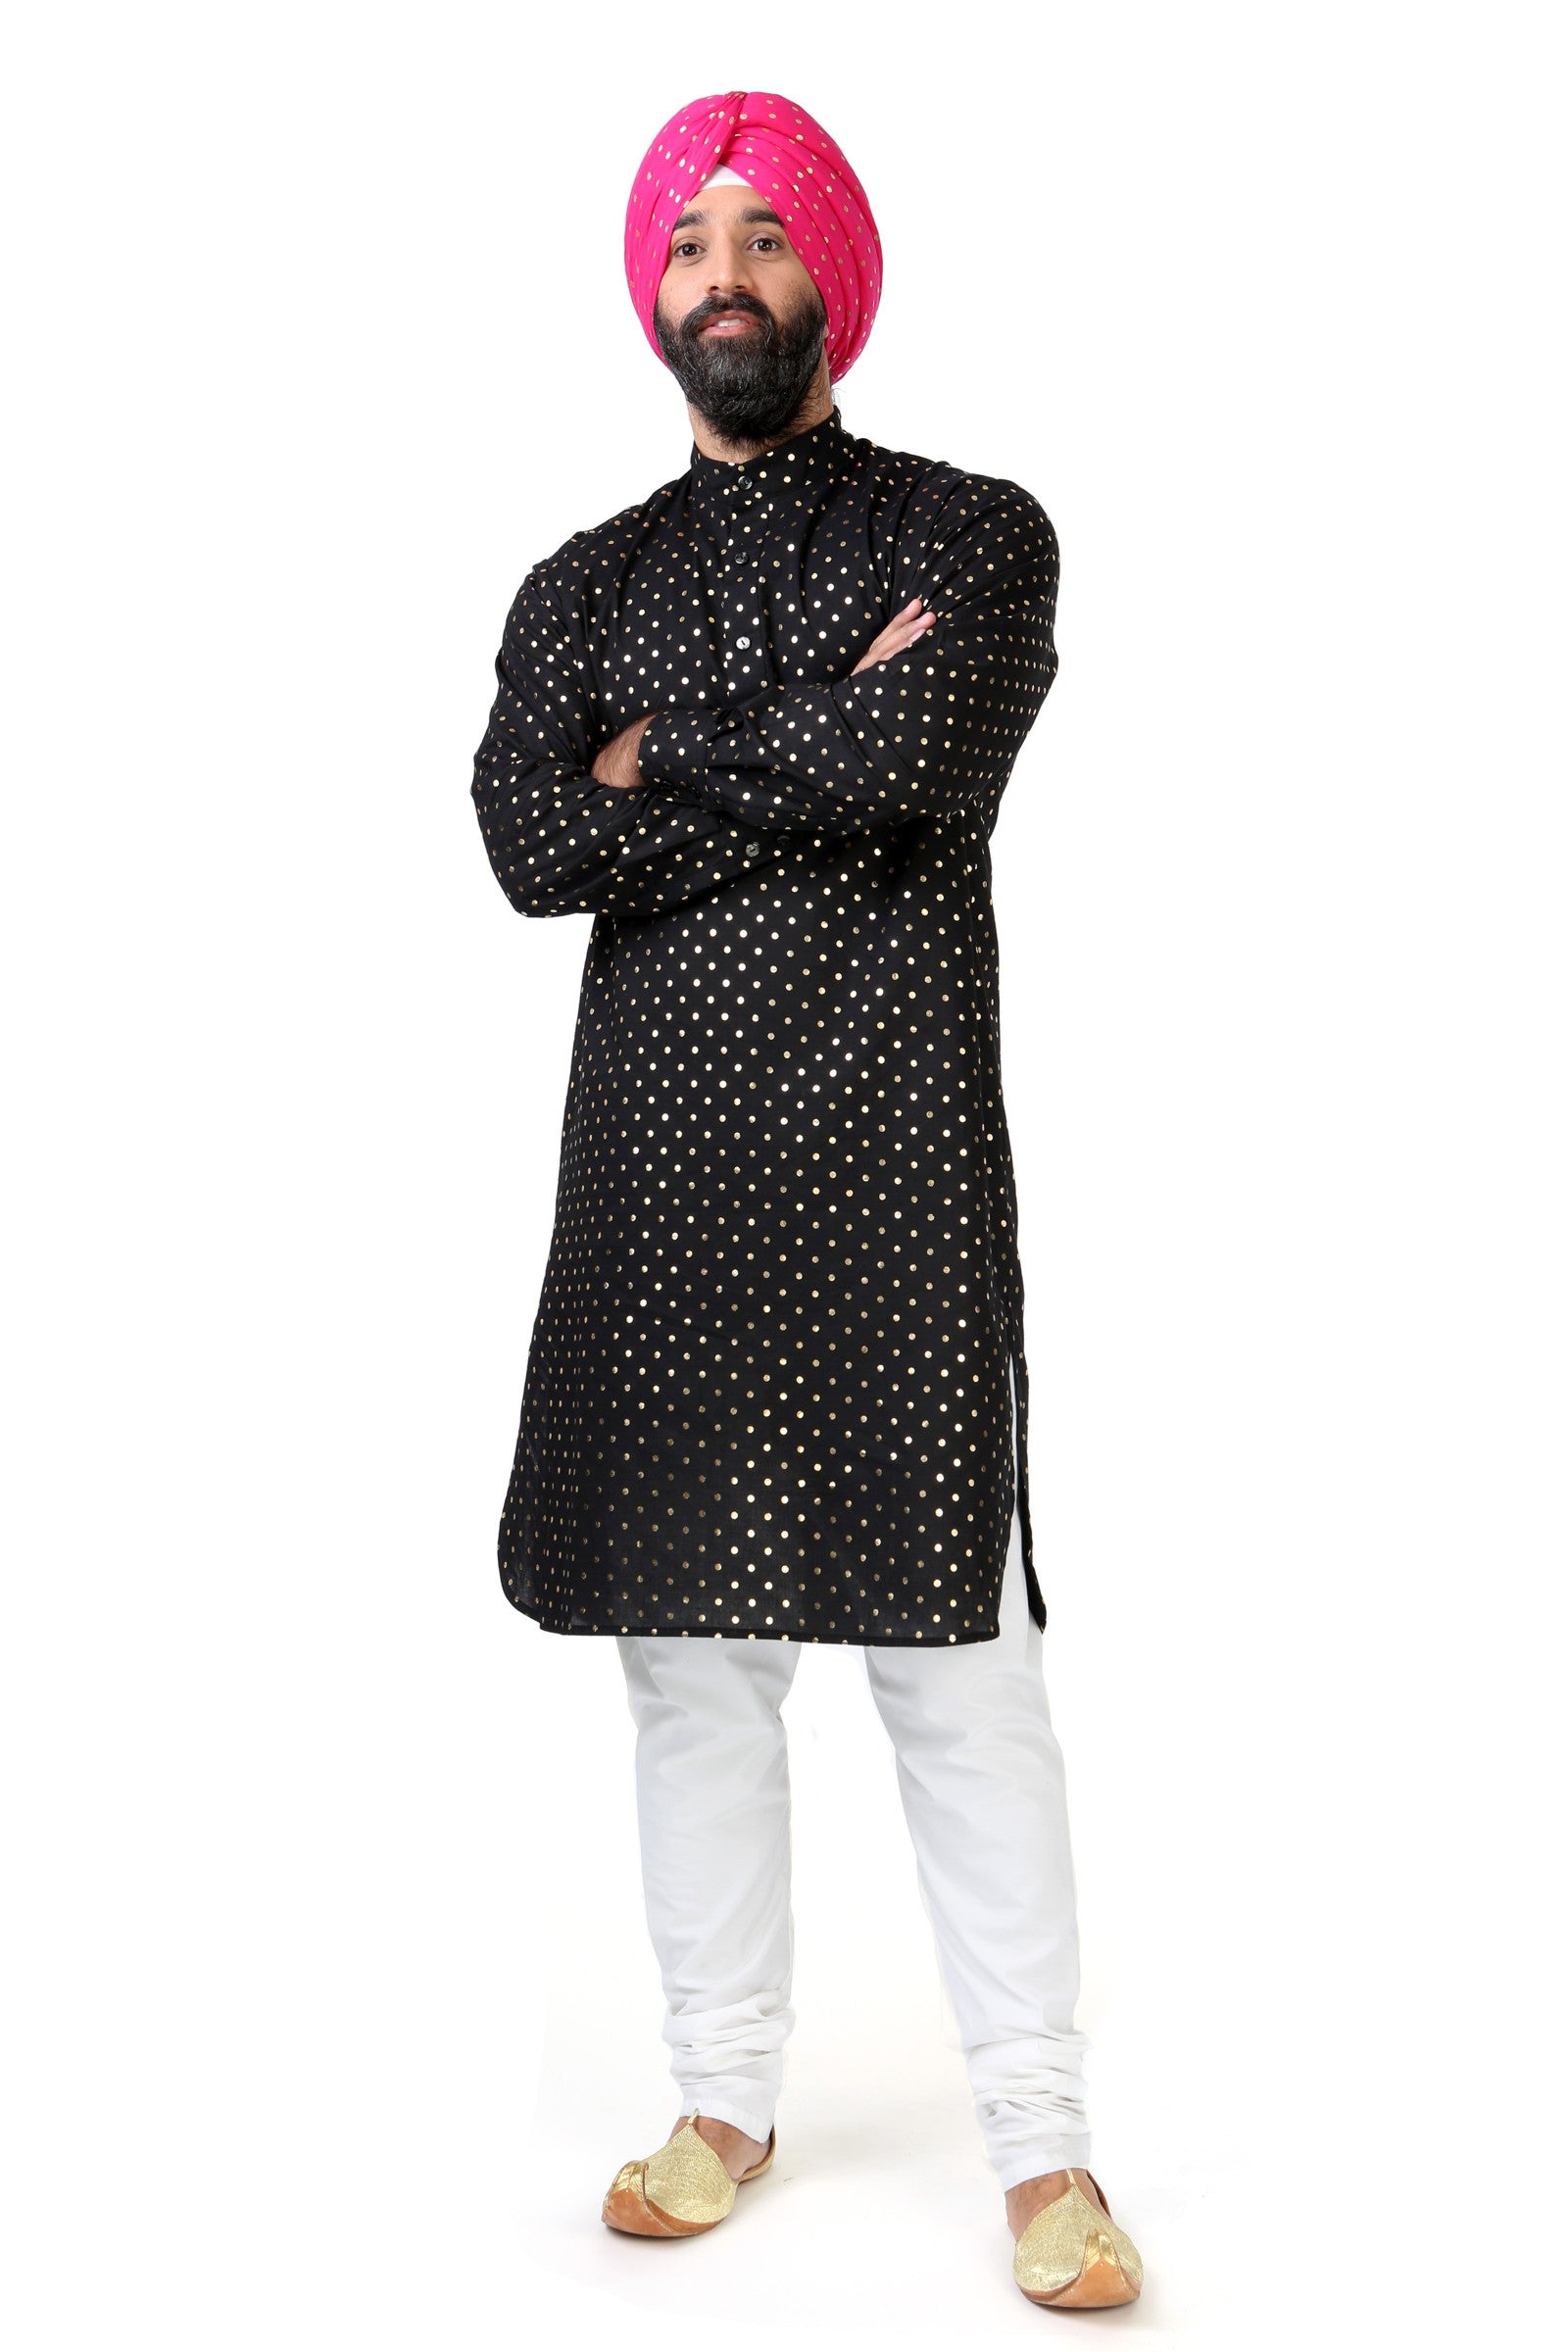 RANJA Tunic in Black and Gold Polkadot Cotton - Front View - Harleen Kaur - South Asian Menswear